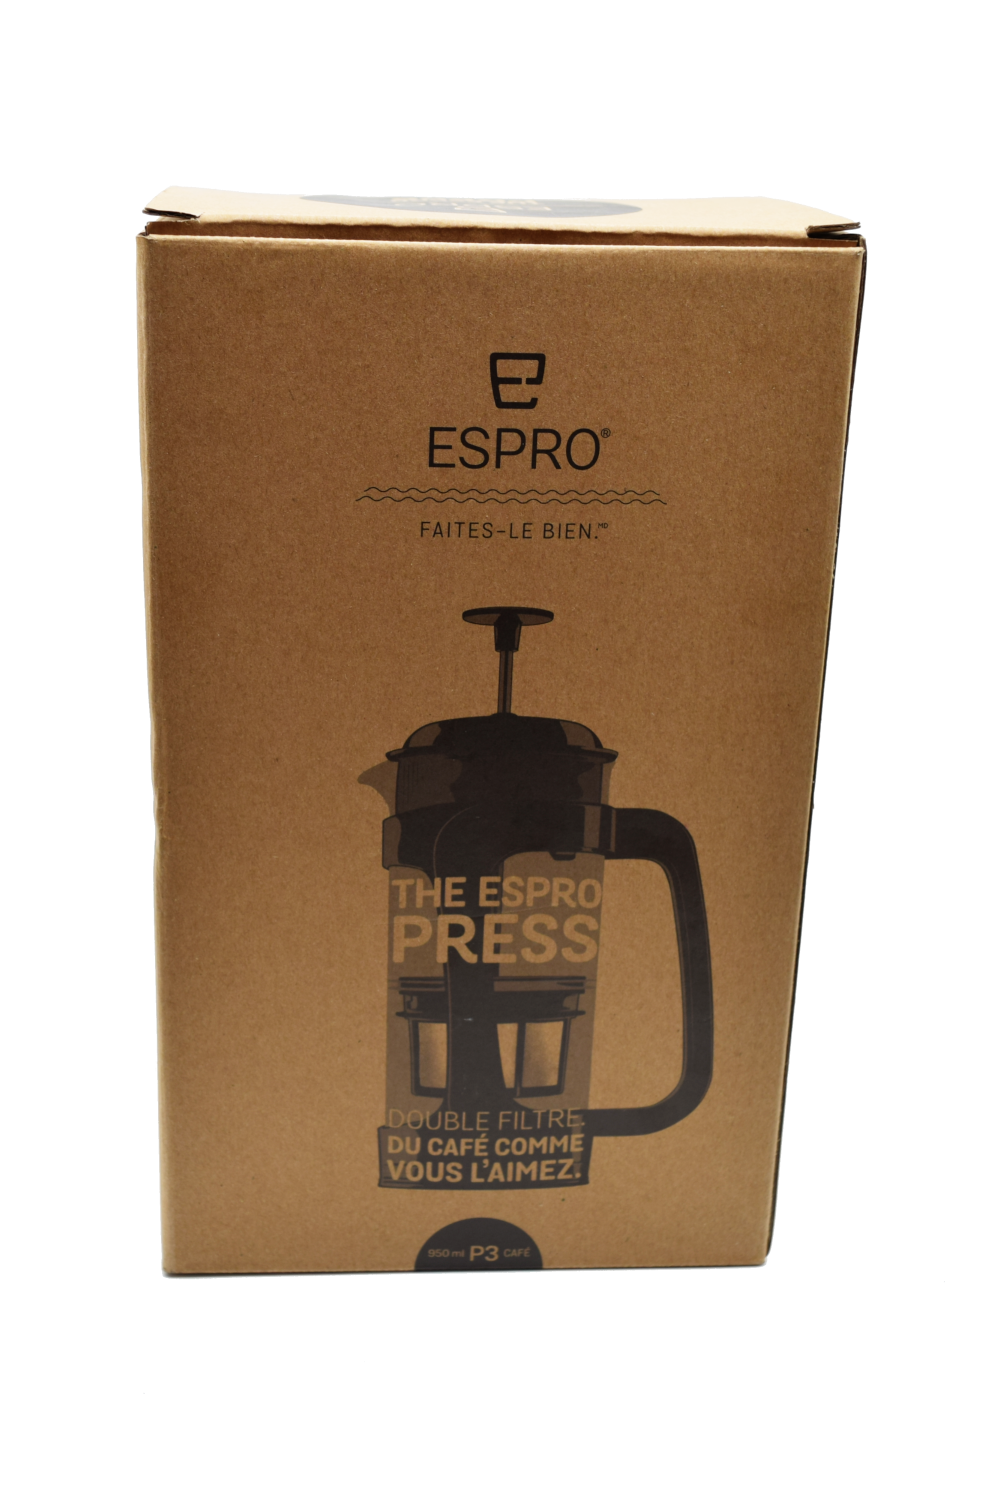 Espro Coffee Press P3 32oz